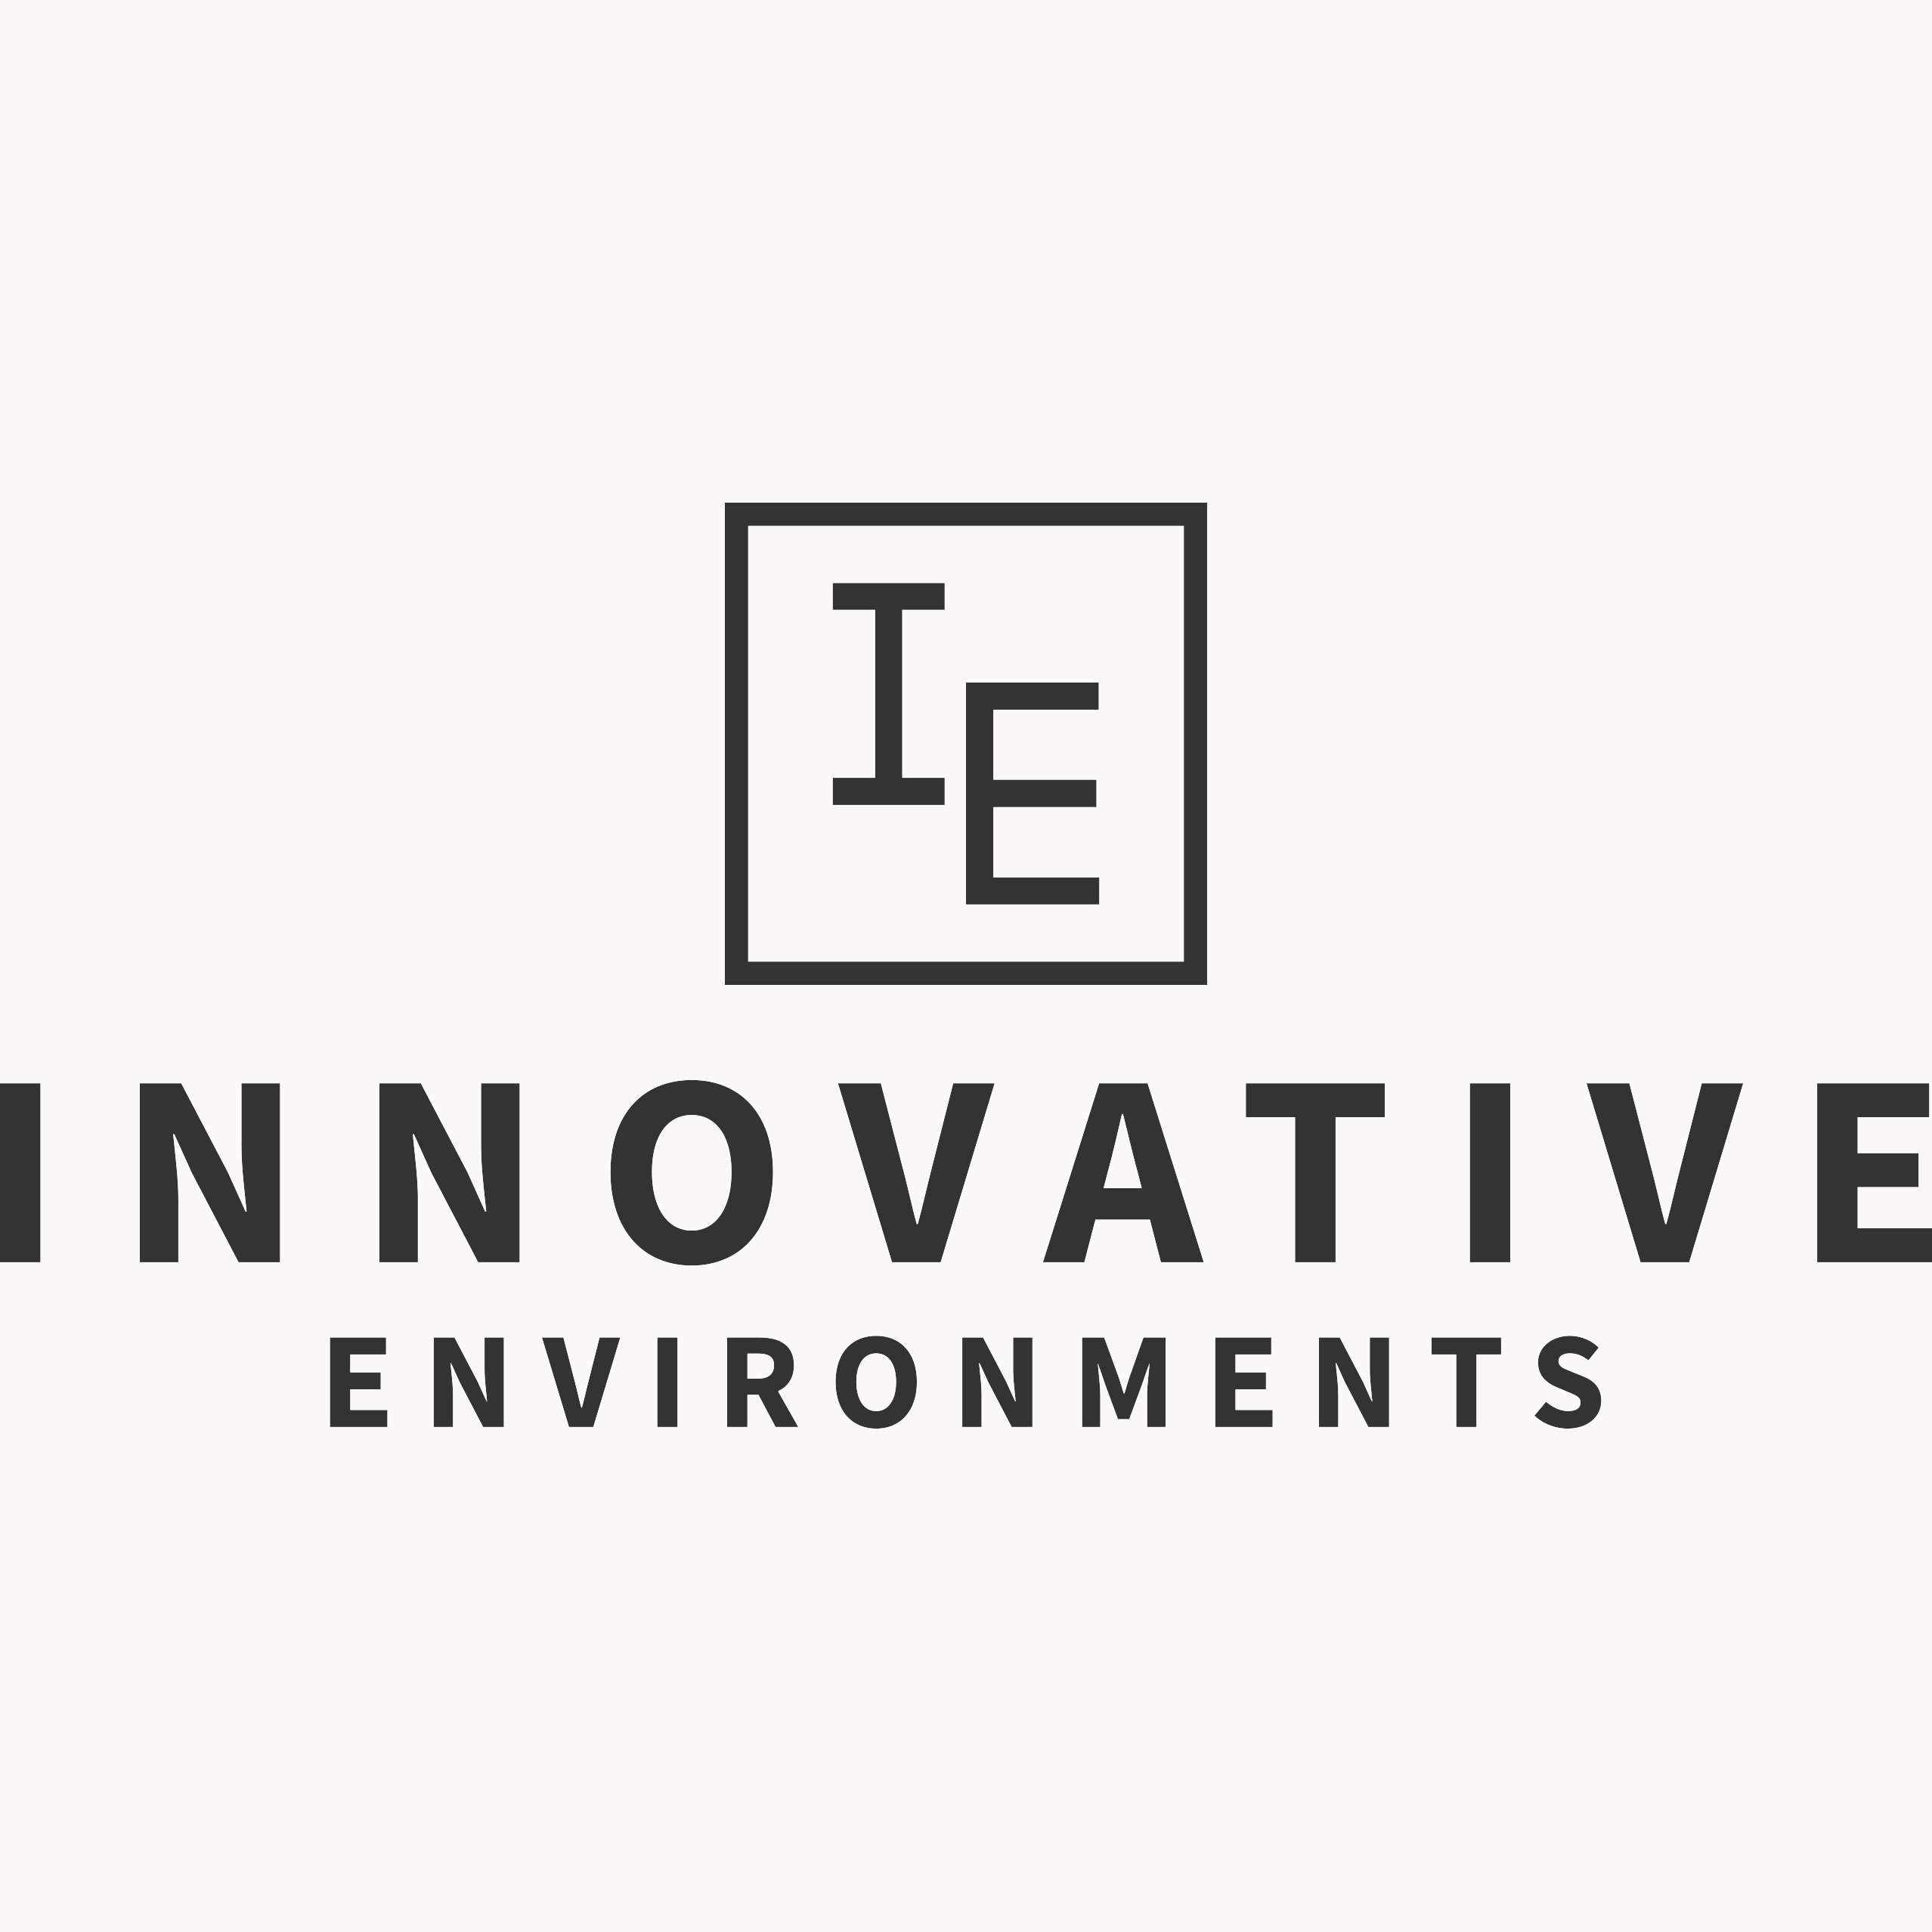 Innovative Environment logo